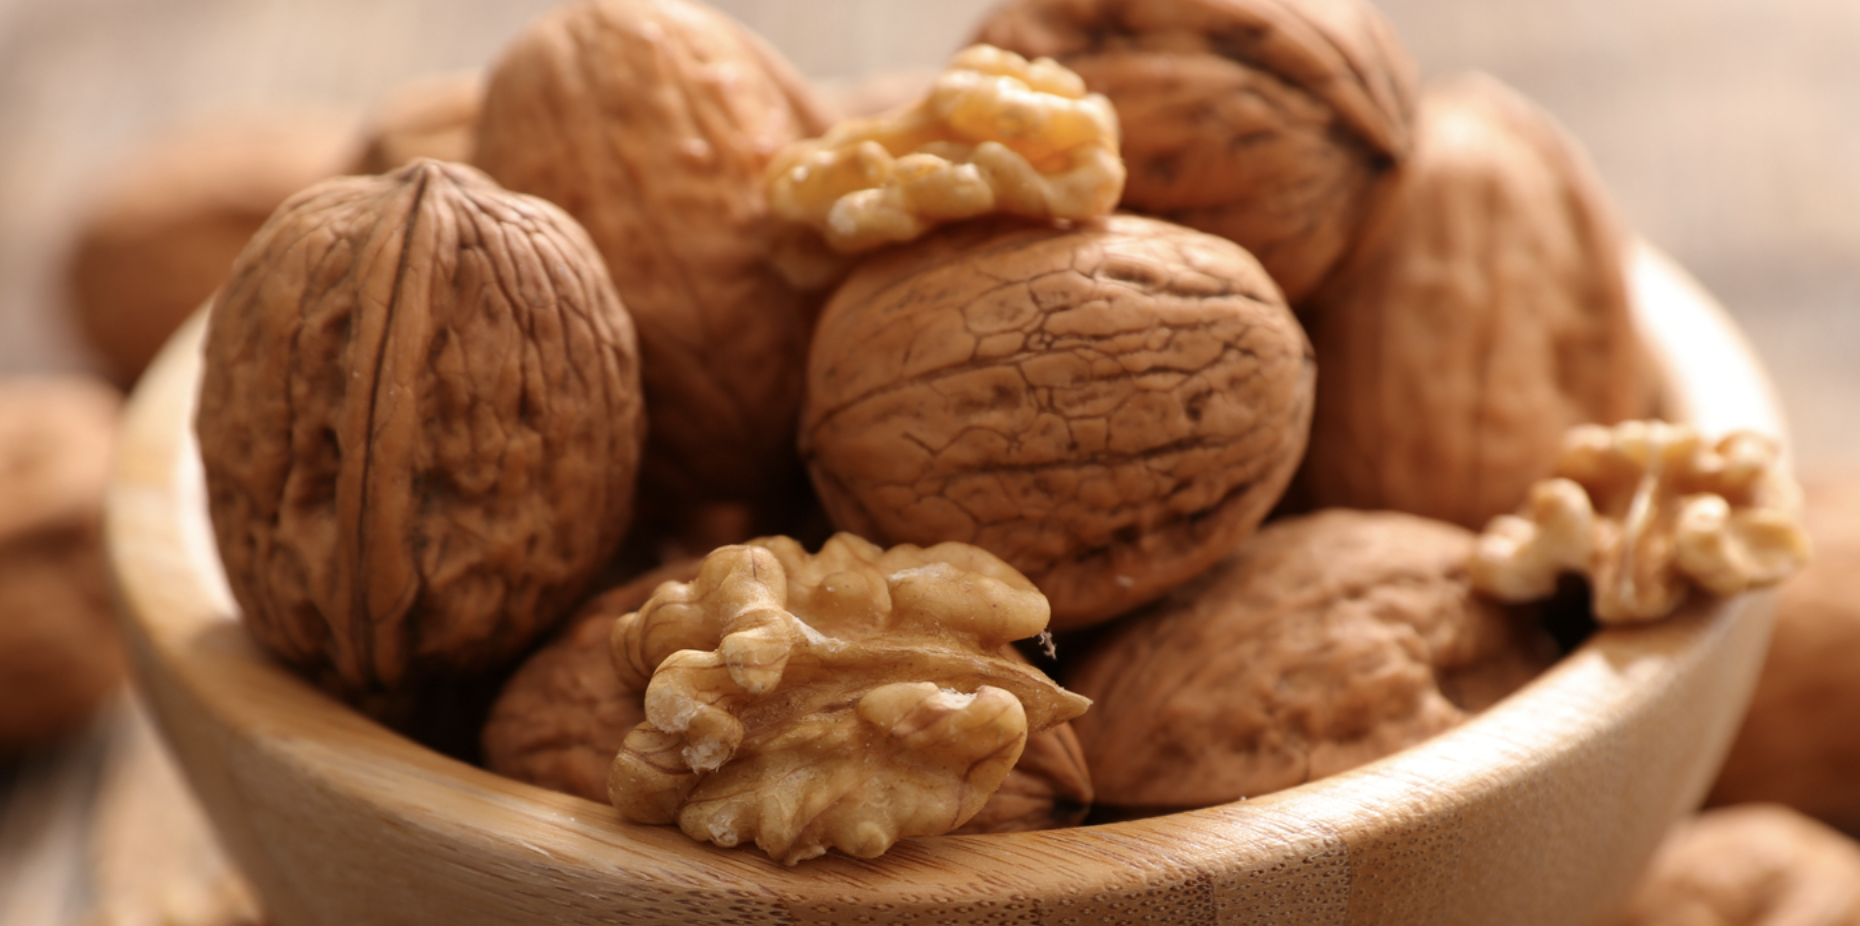 7 Proven Health Benefits of Walnuts